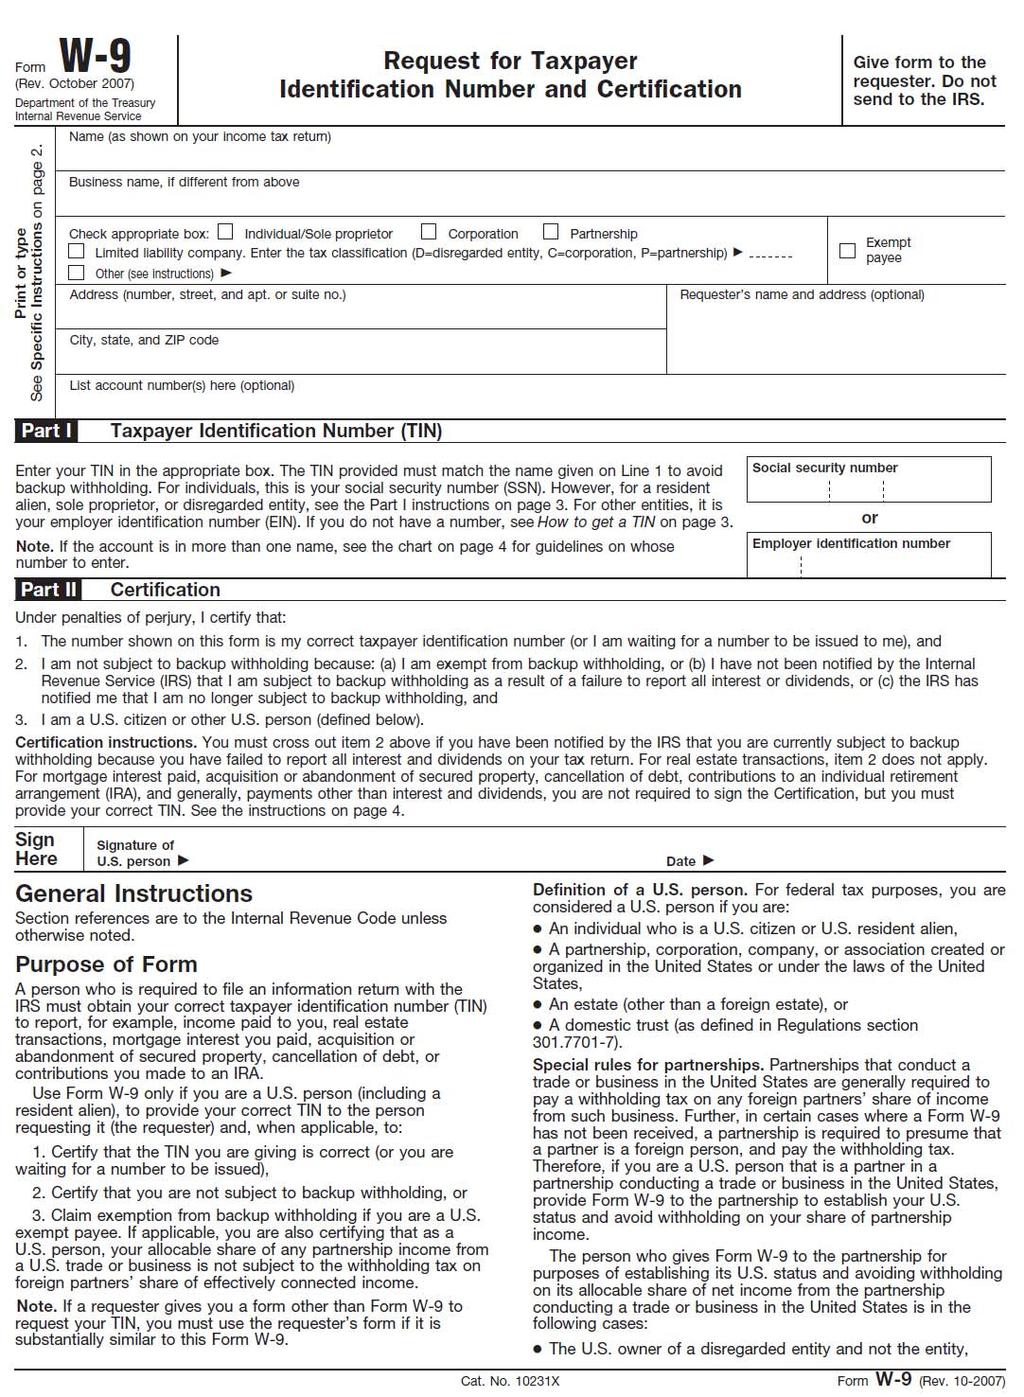 W9 IRS 1099 Form www.h-m-g.